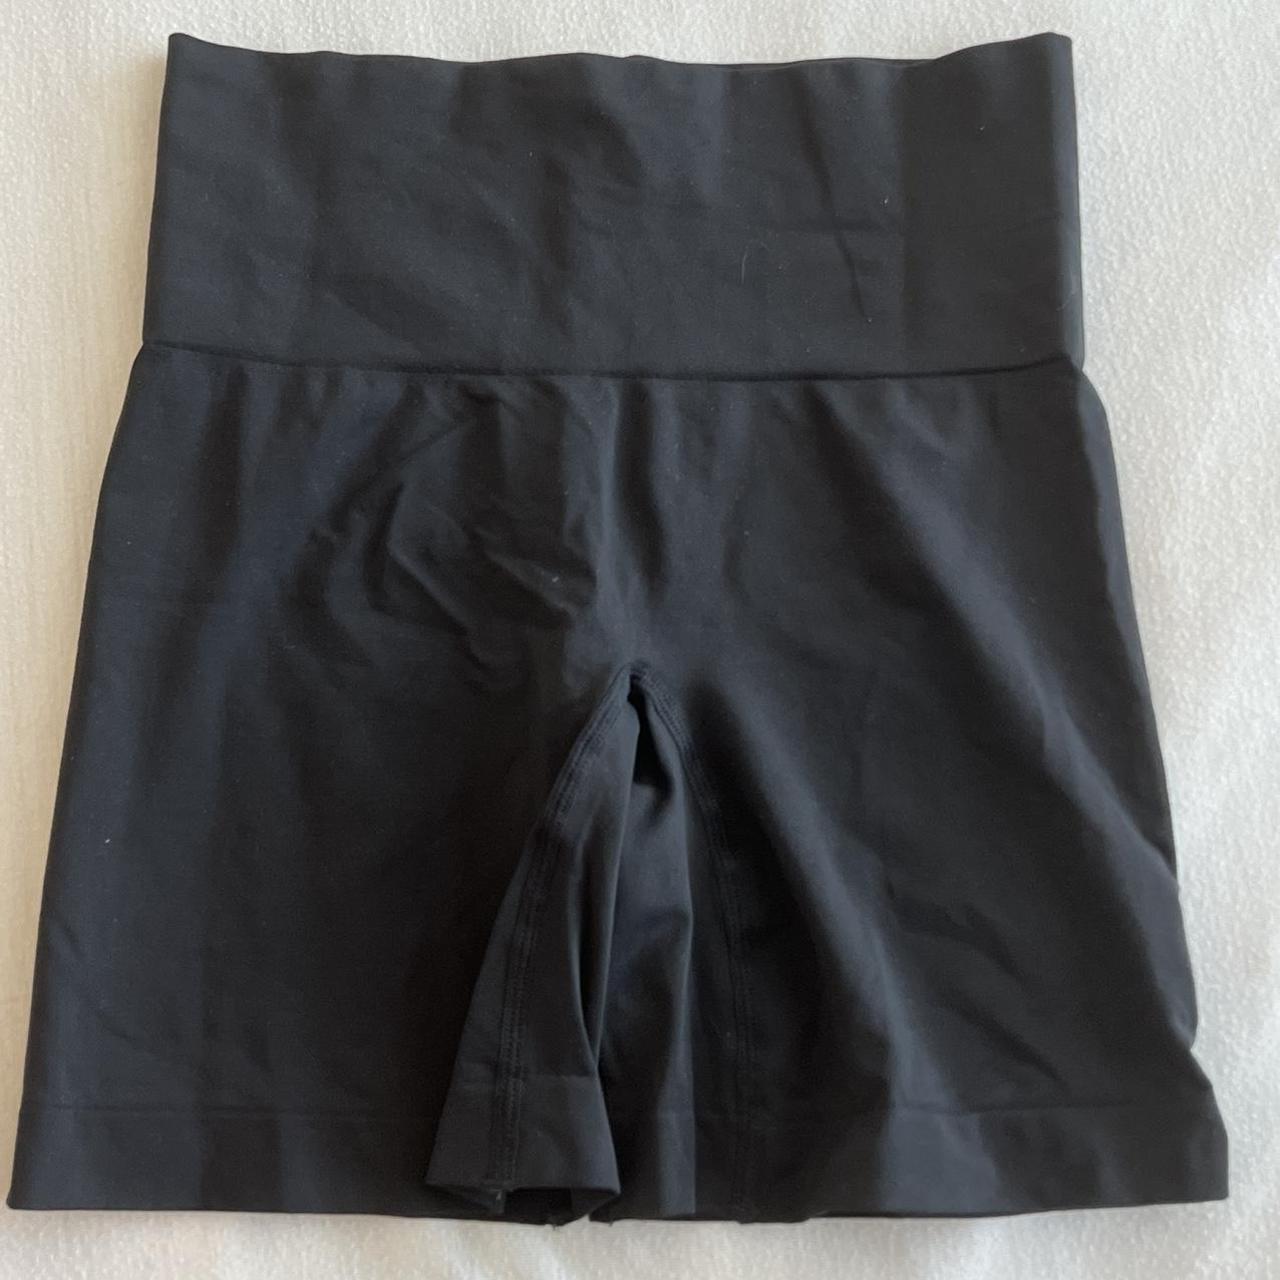 Skims Soft smoothing shorts - Depop